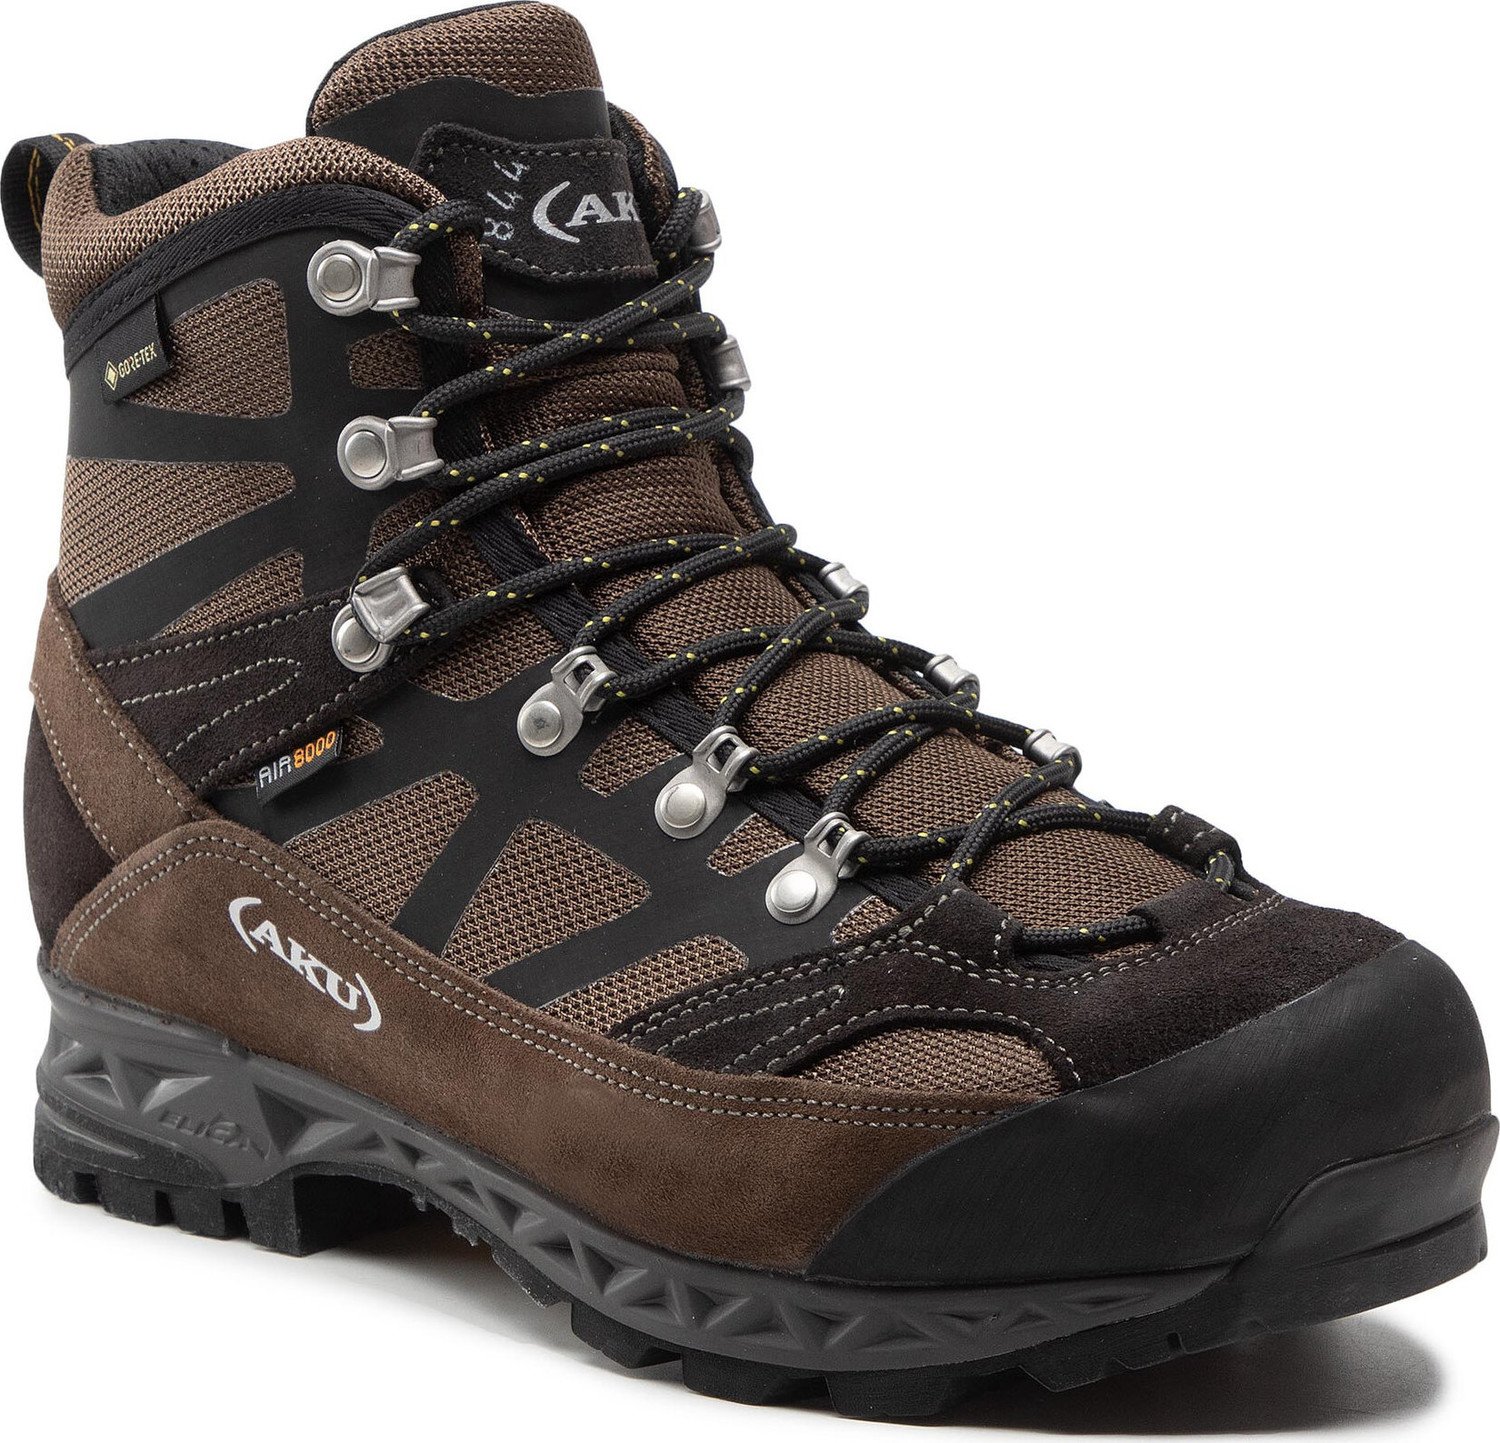 Trekingová obuv Aku Trekker Pro Gtx GORE-TEX 844 Brown/Black 475